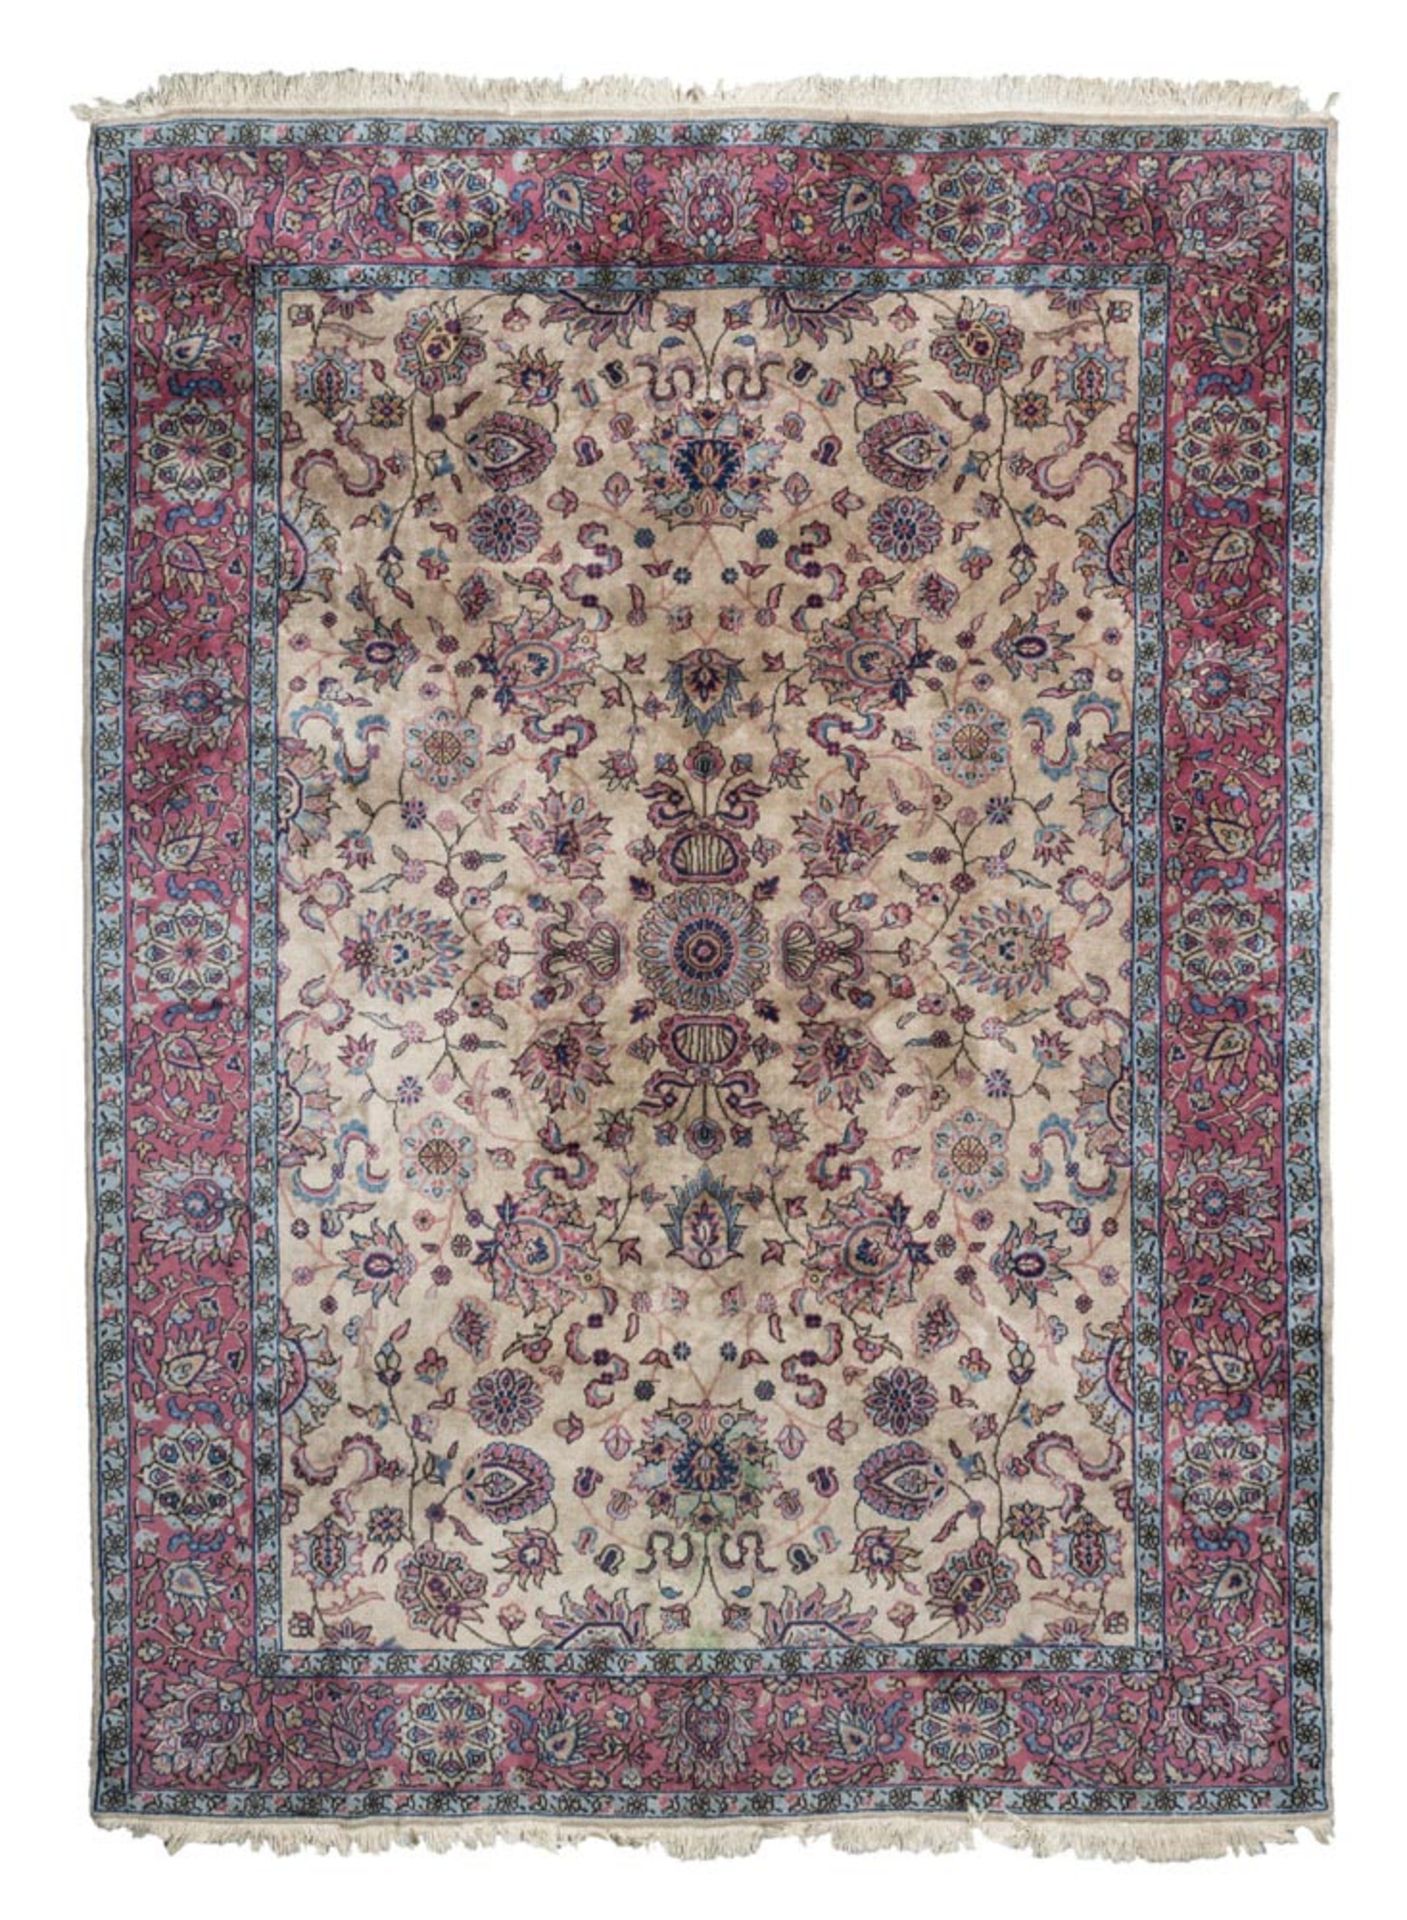 Anatolic Sparta Carpet, early 20th century. Measures cm. 345 x 250. TAPPETO ANATOLICO SPARTA,